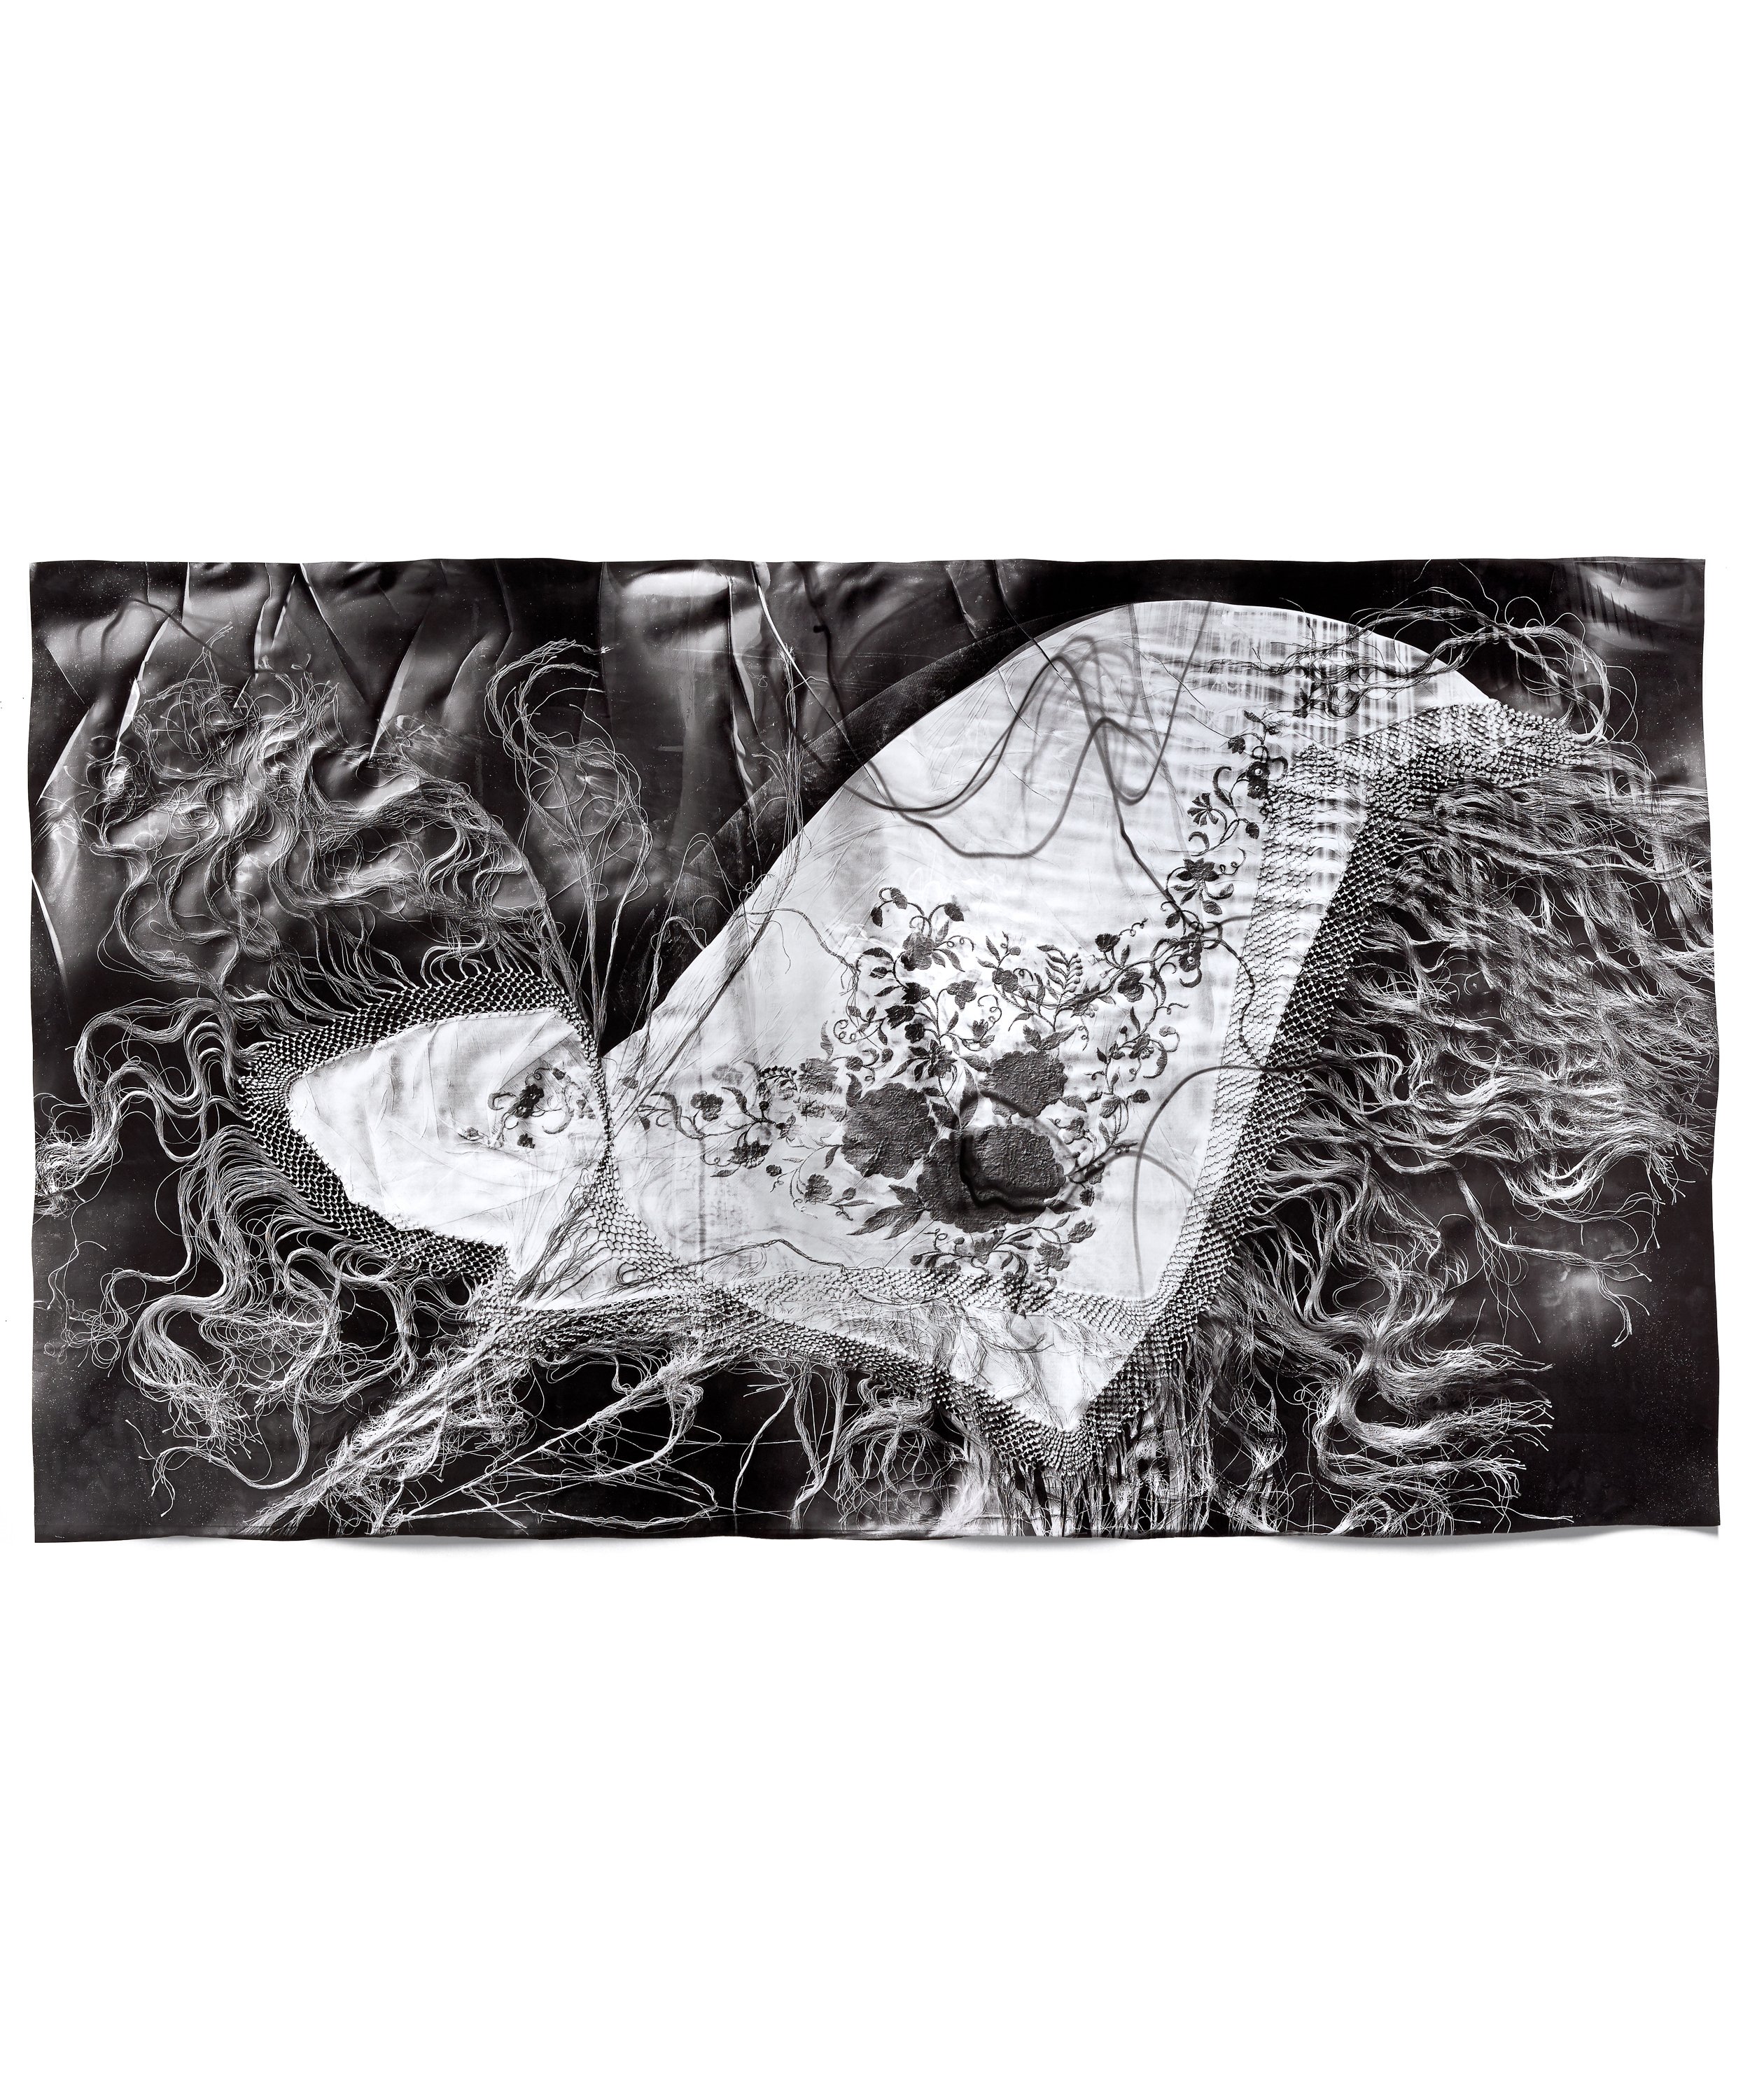   Manton de Manila 3,  2018 Photographic relief (embossed silver gelatin photogram) Impression of hand-embroidered silk Manton de Manila or Piano Shawl (Spain, 1930s) 43 x 74 in 